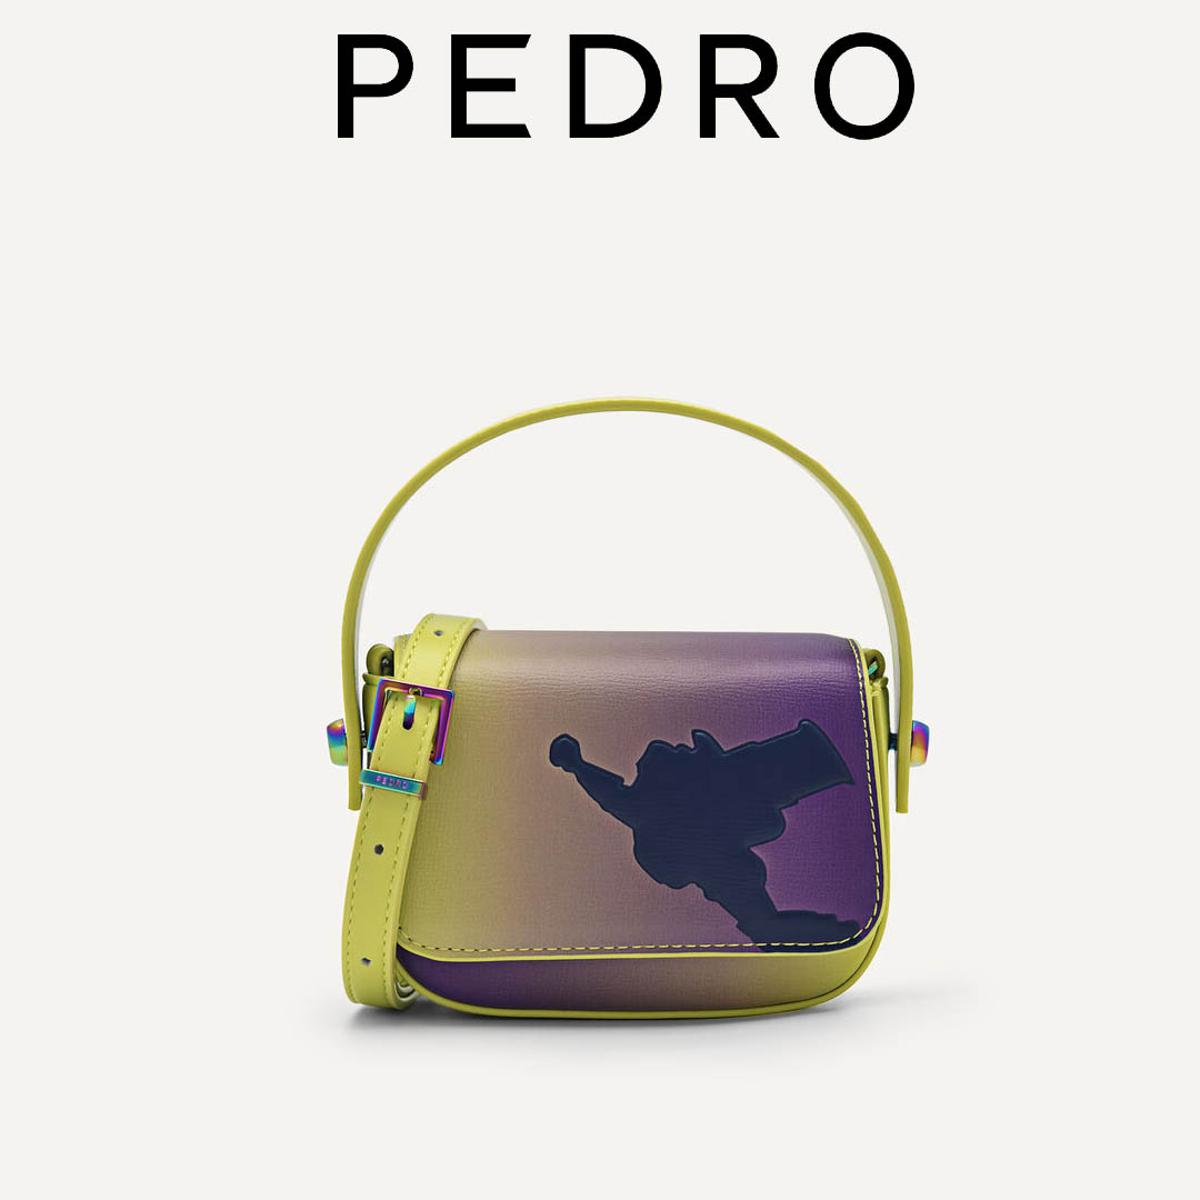 PEDRO Studio Bella Leather Handbag in Pixel - Chalk